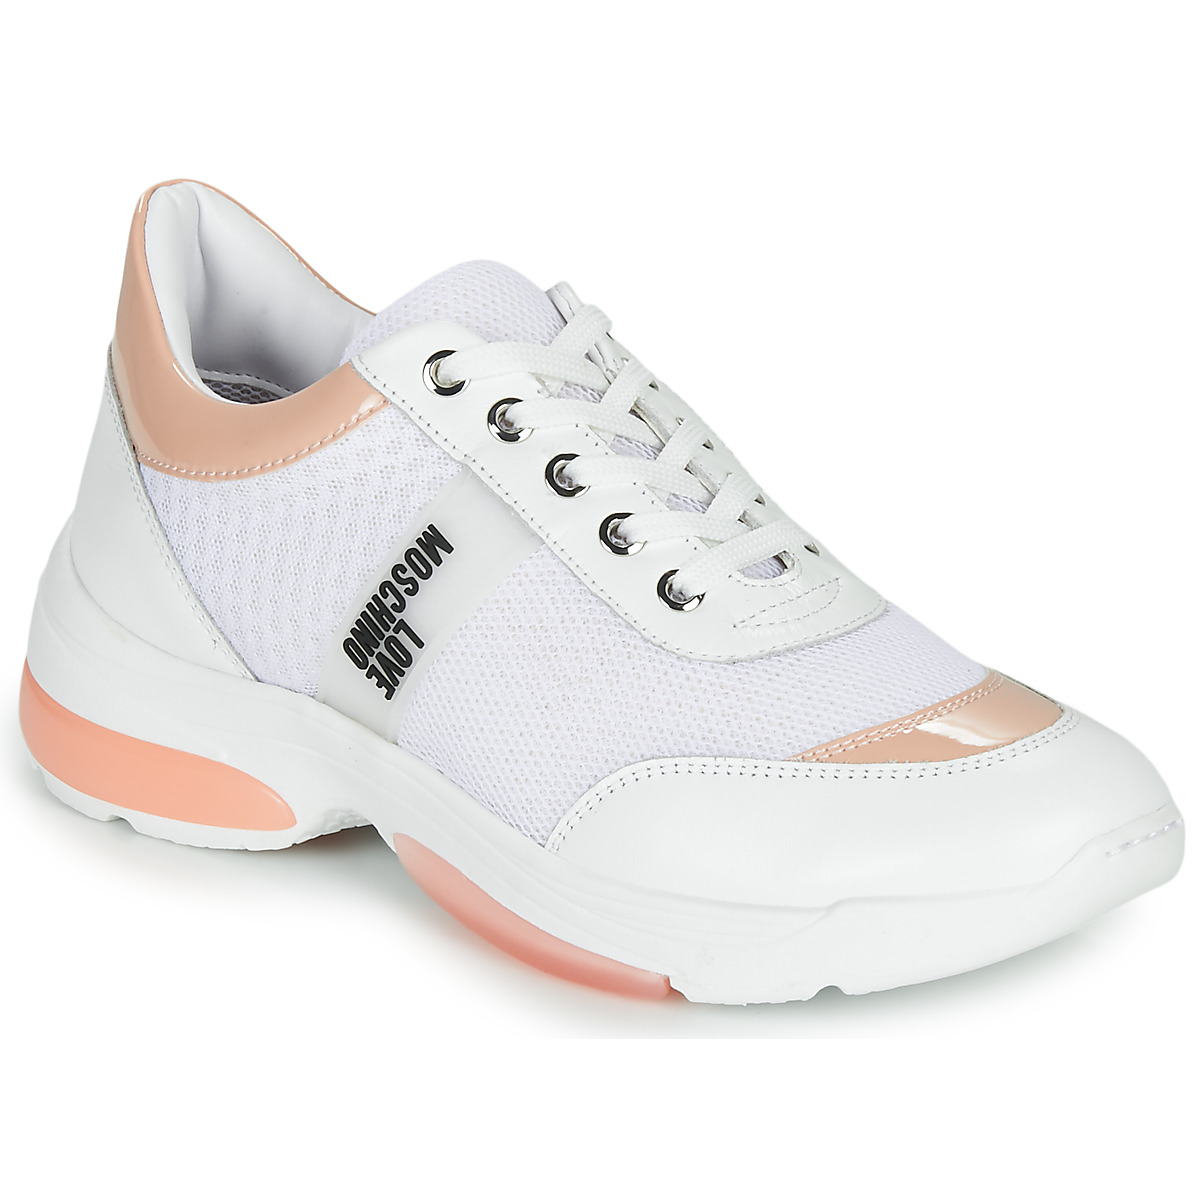 moschino tennis shoes